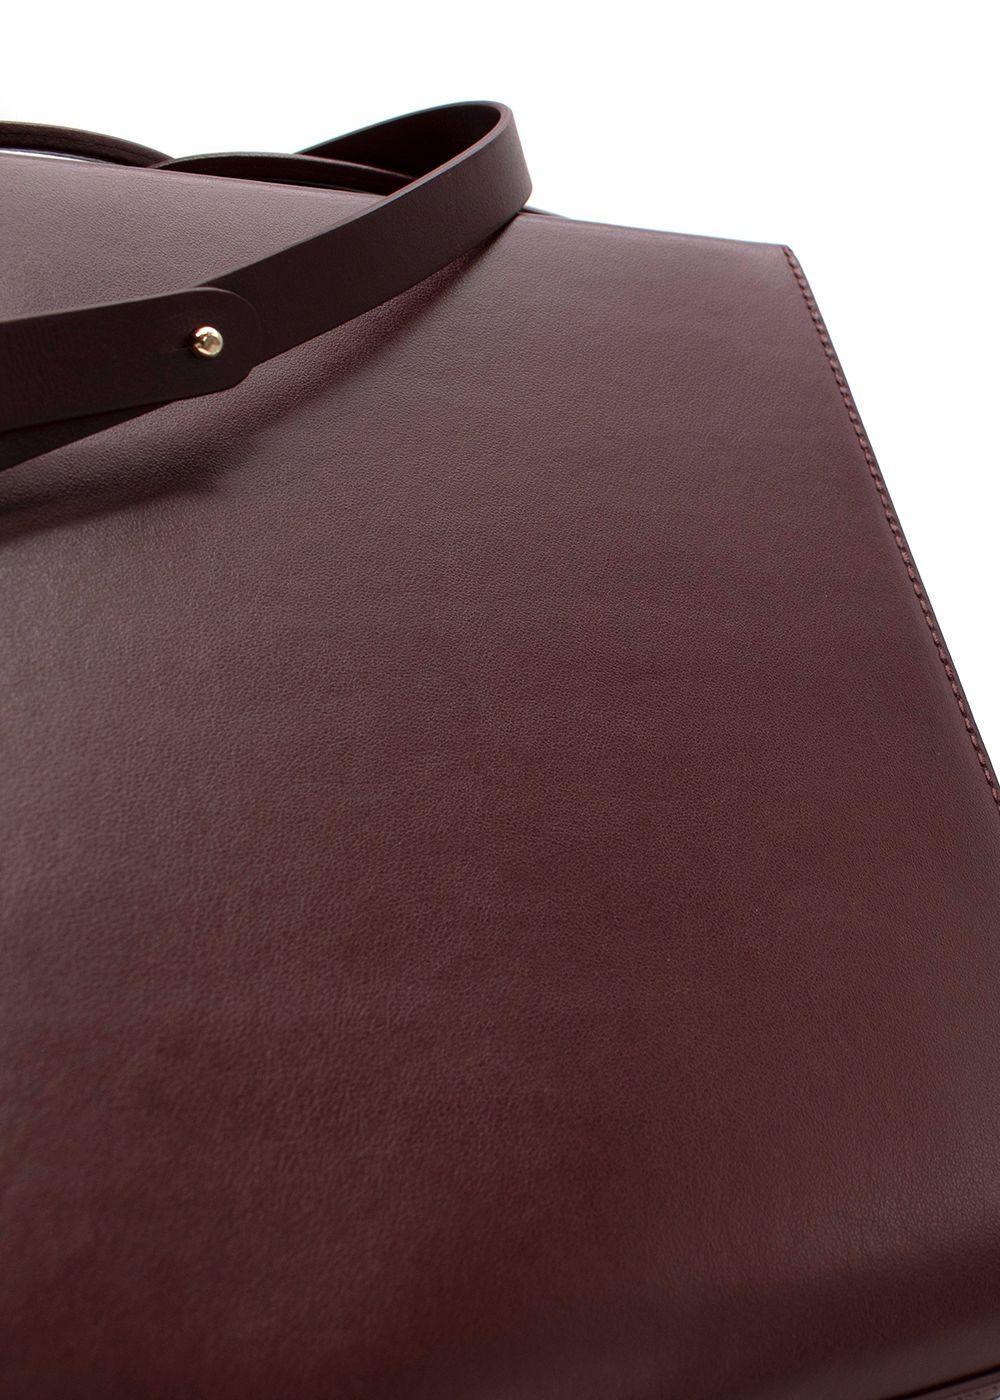 Roksanda Ilincic Burgundy Leather Flat Box Bag For Sale 1